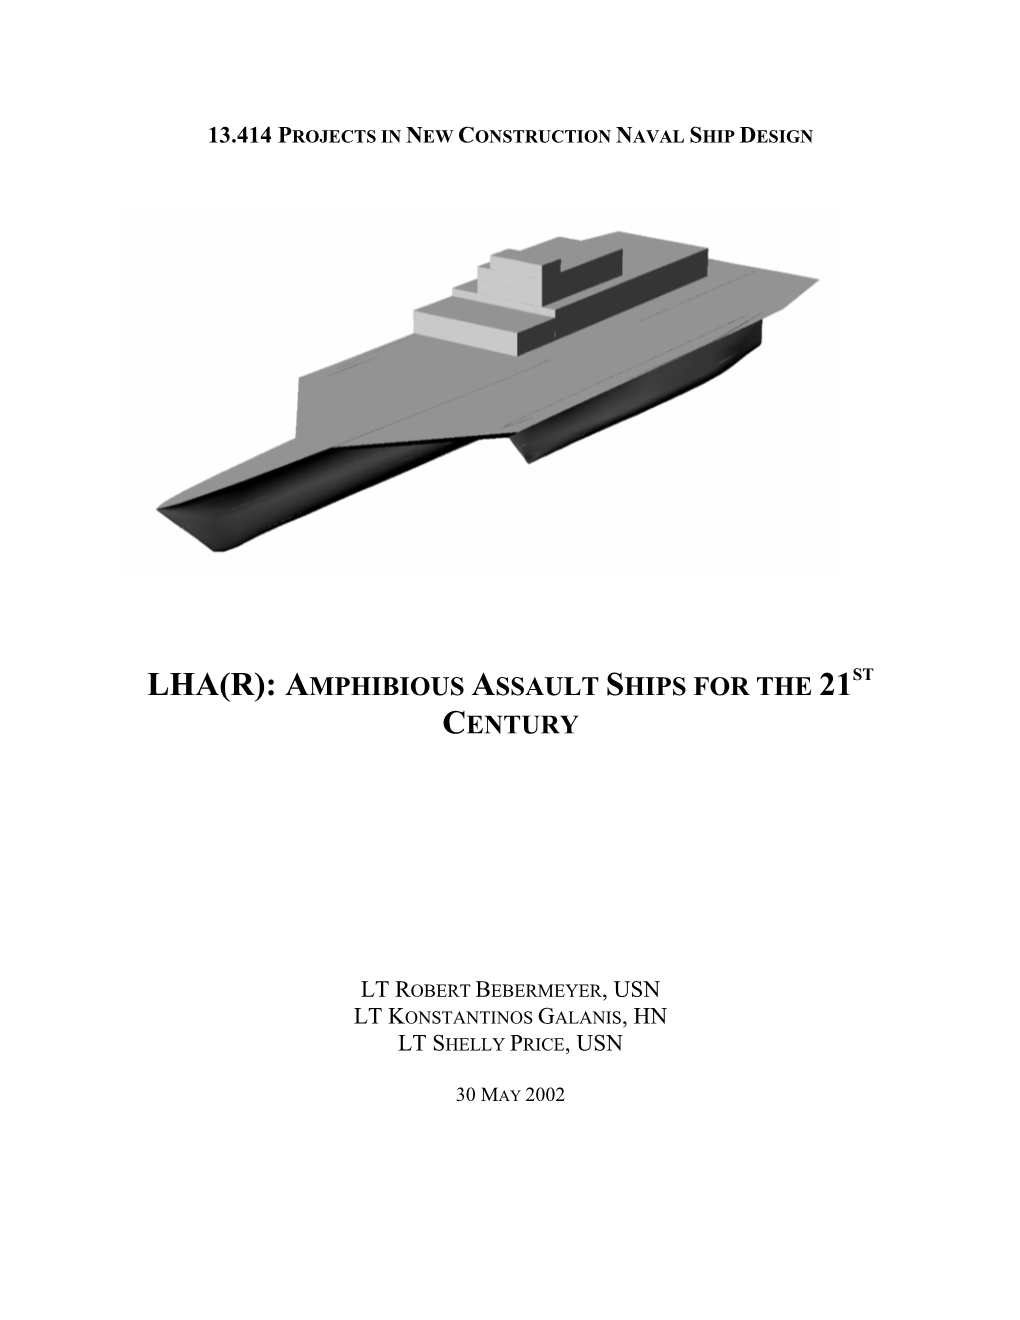 Amphibious Assault Ships for the 21St Century